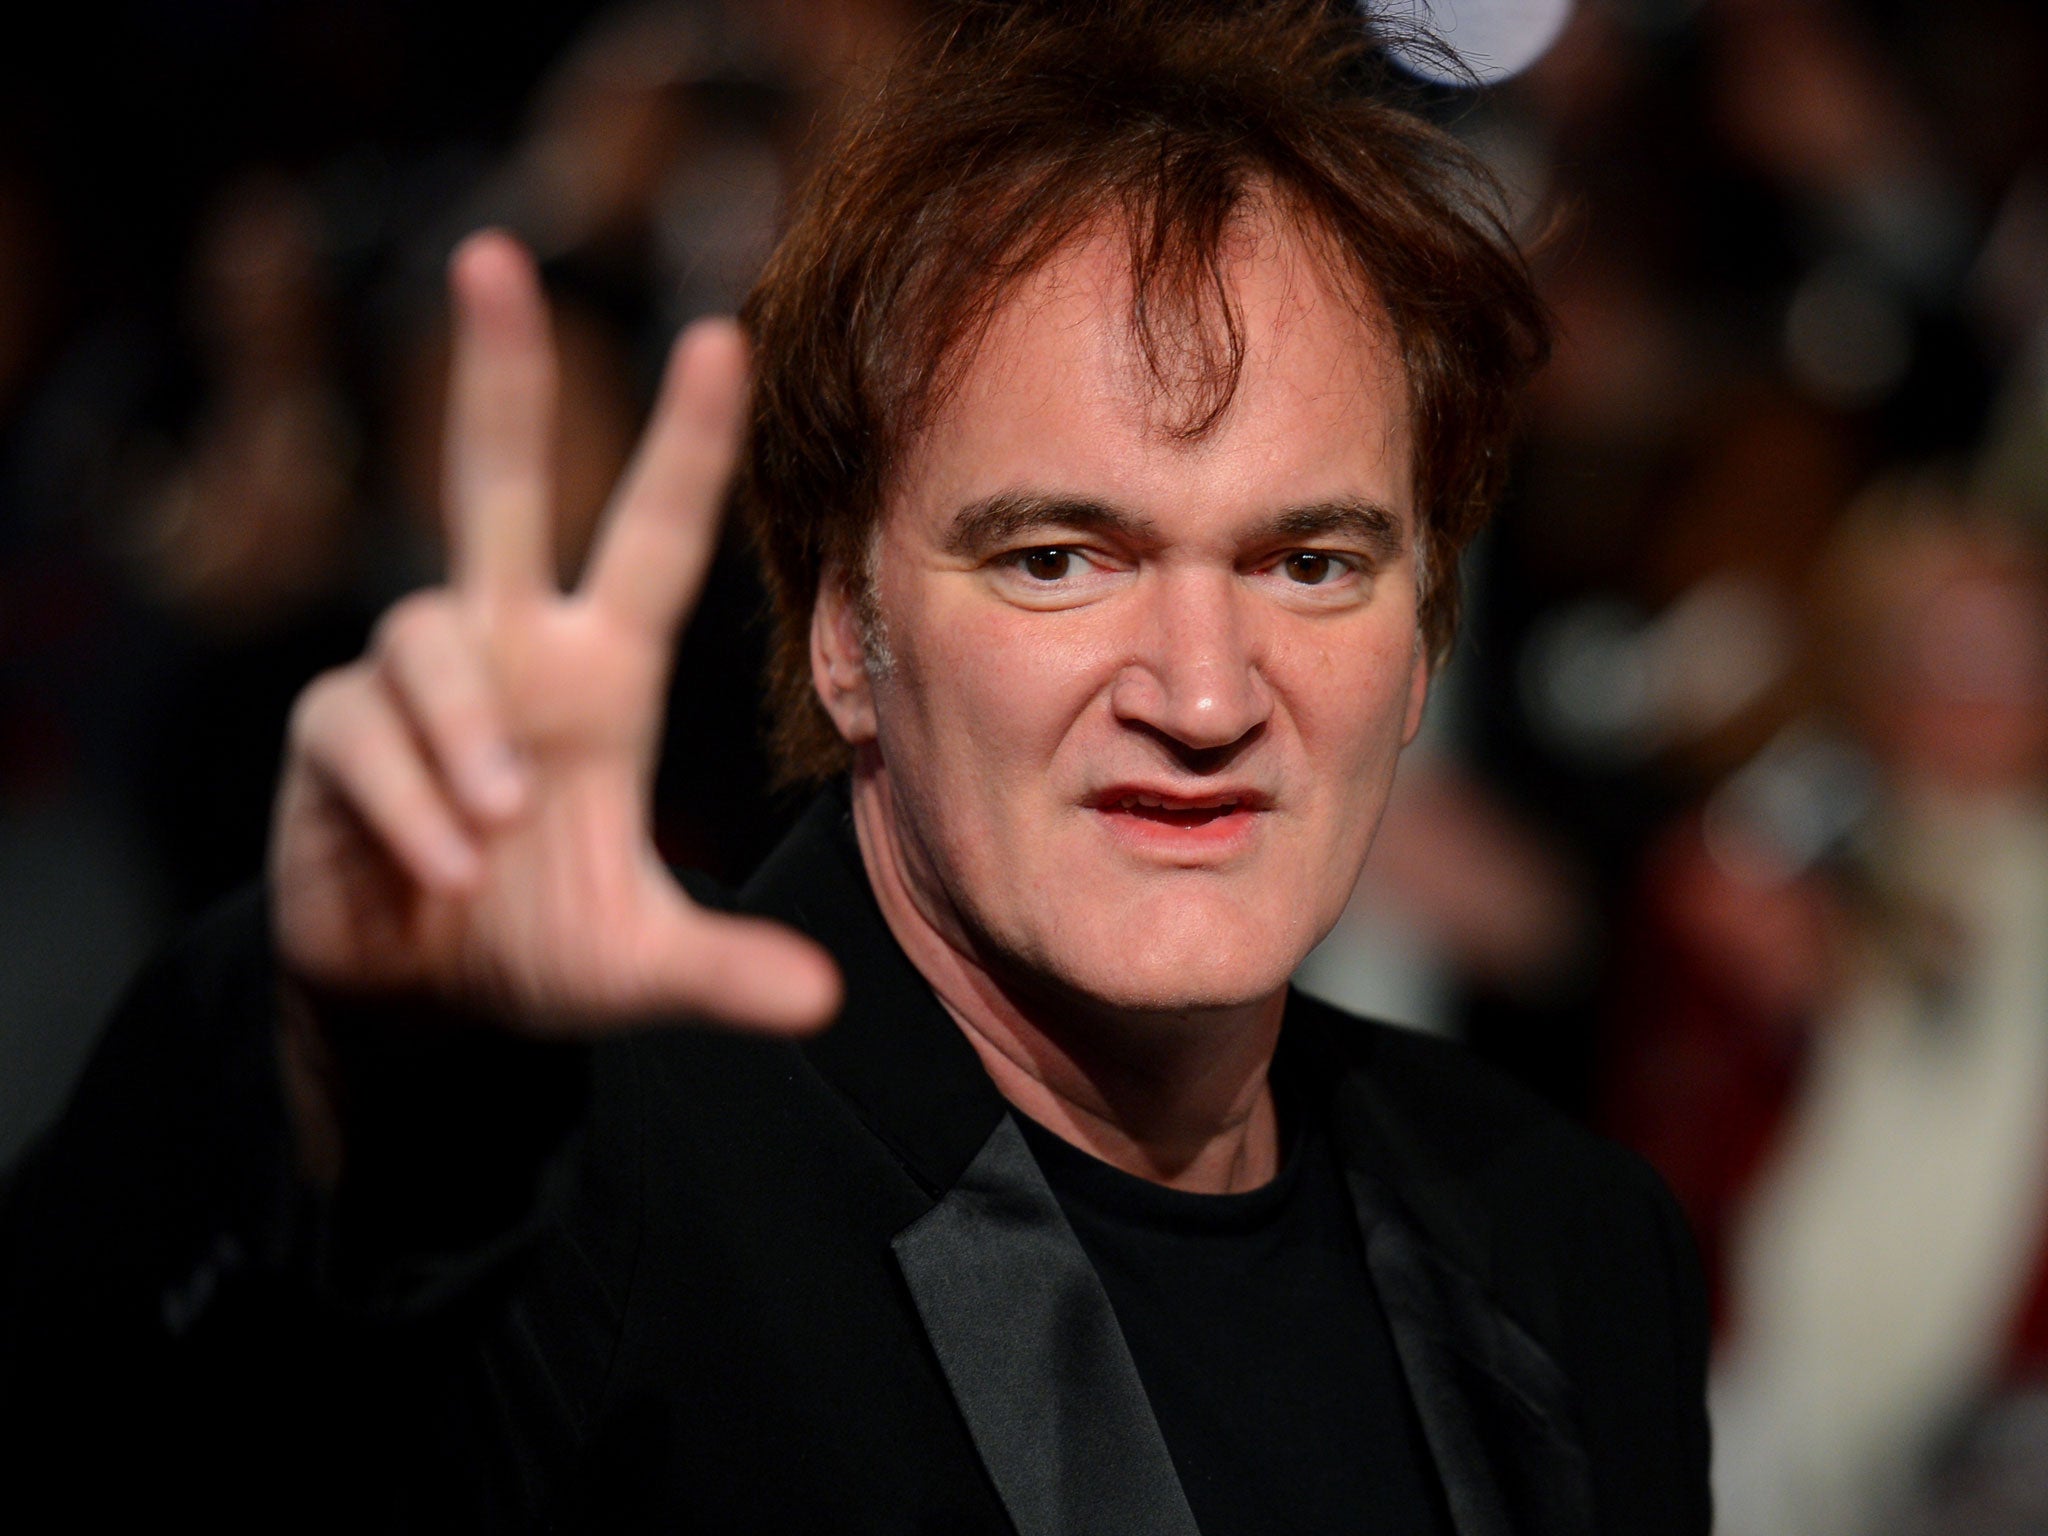 Tarantino said his inspiration was The Jungle Book